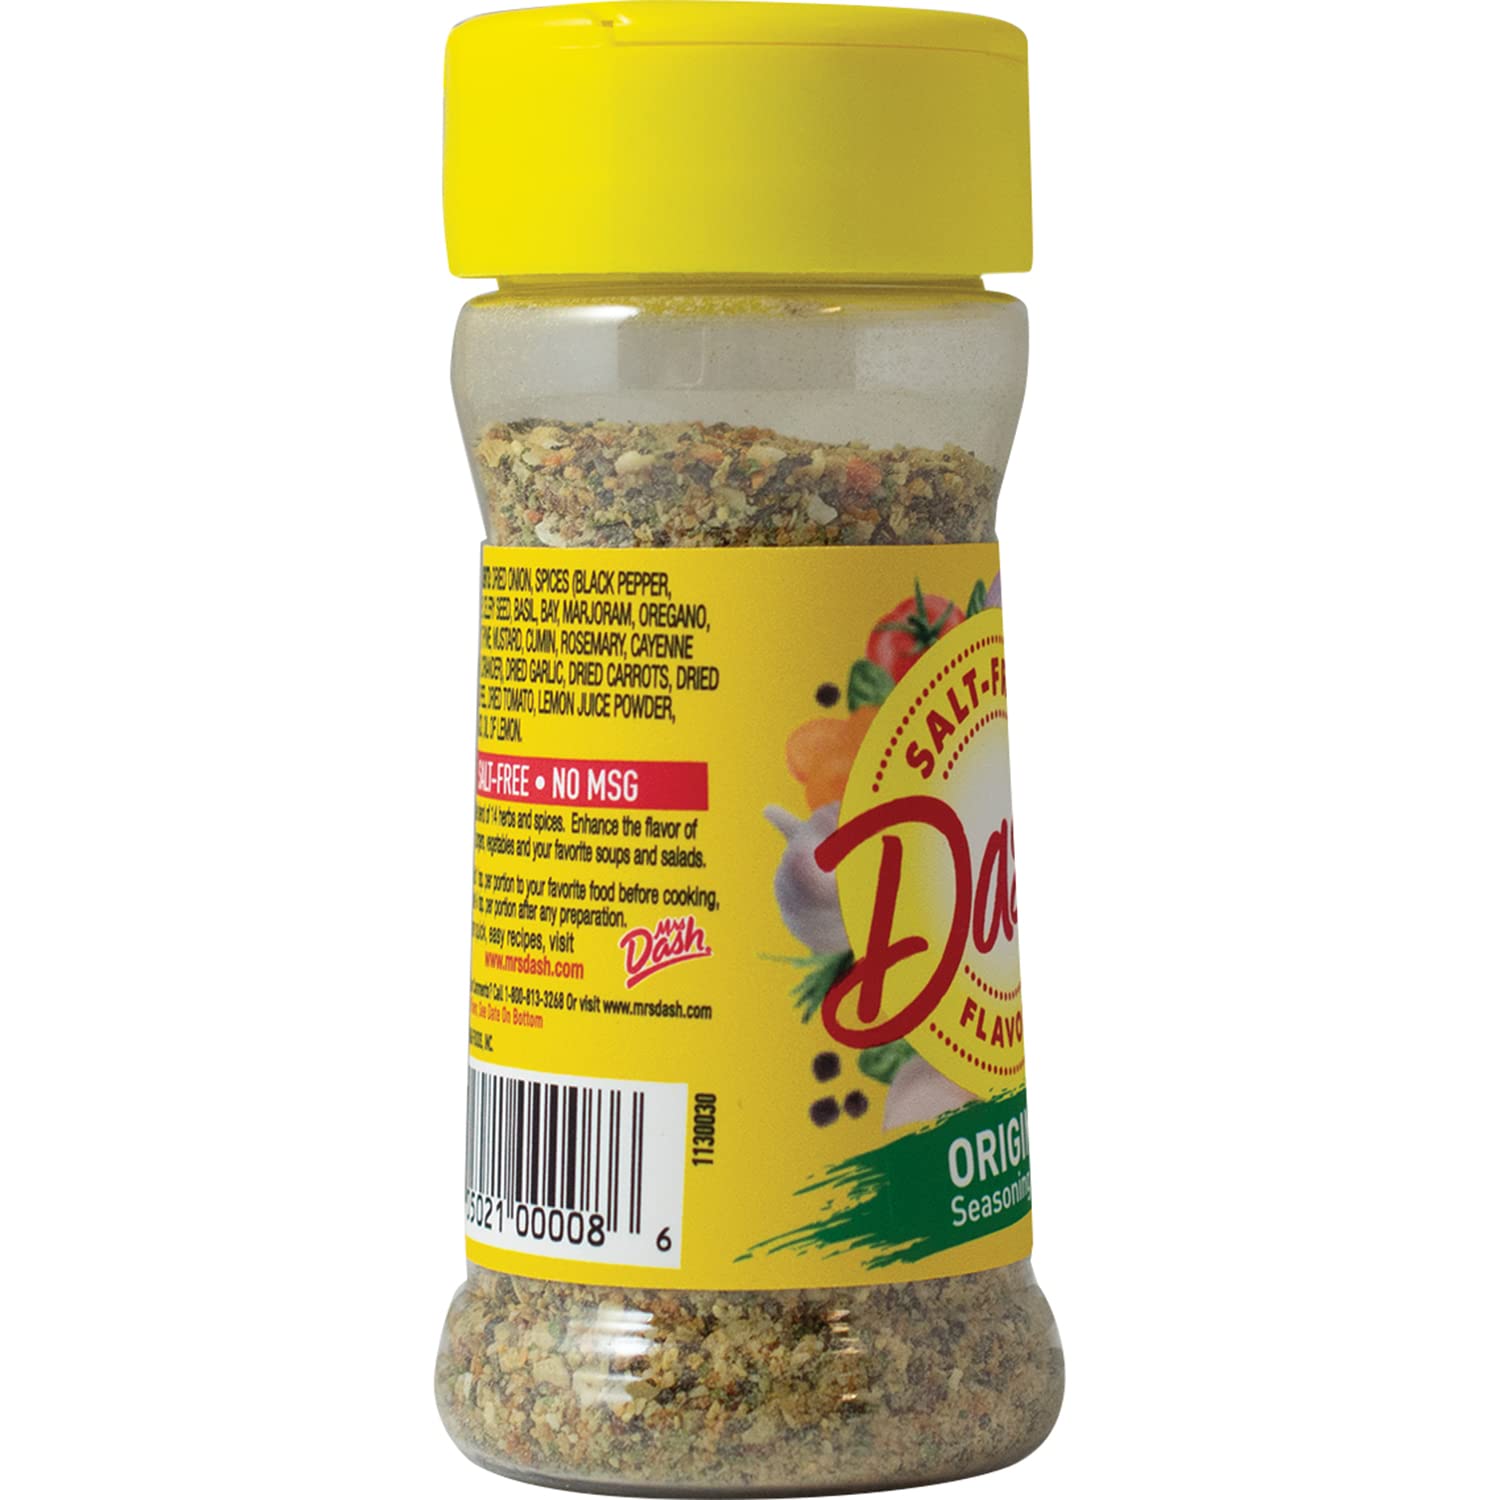 Dash Salt Free Seasoning Blend Original 2.5 oz-Pack of 8-$12.48 ($1.56 each) Amazon